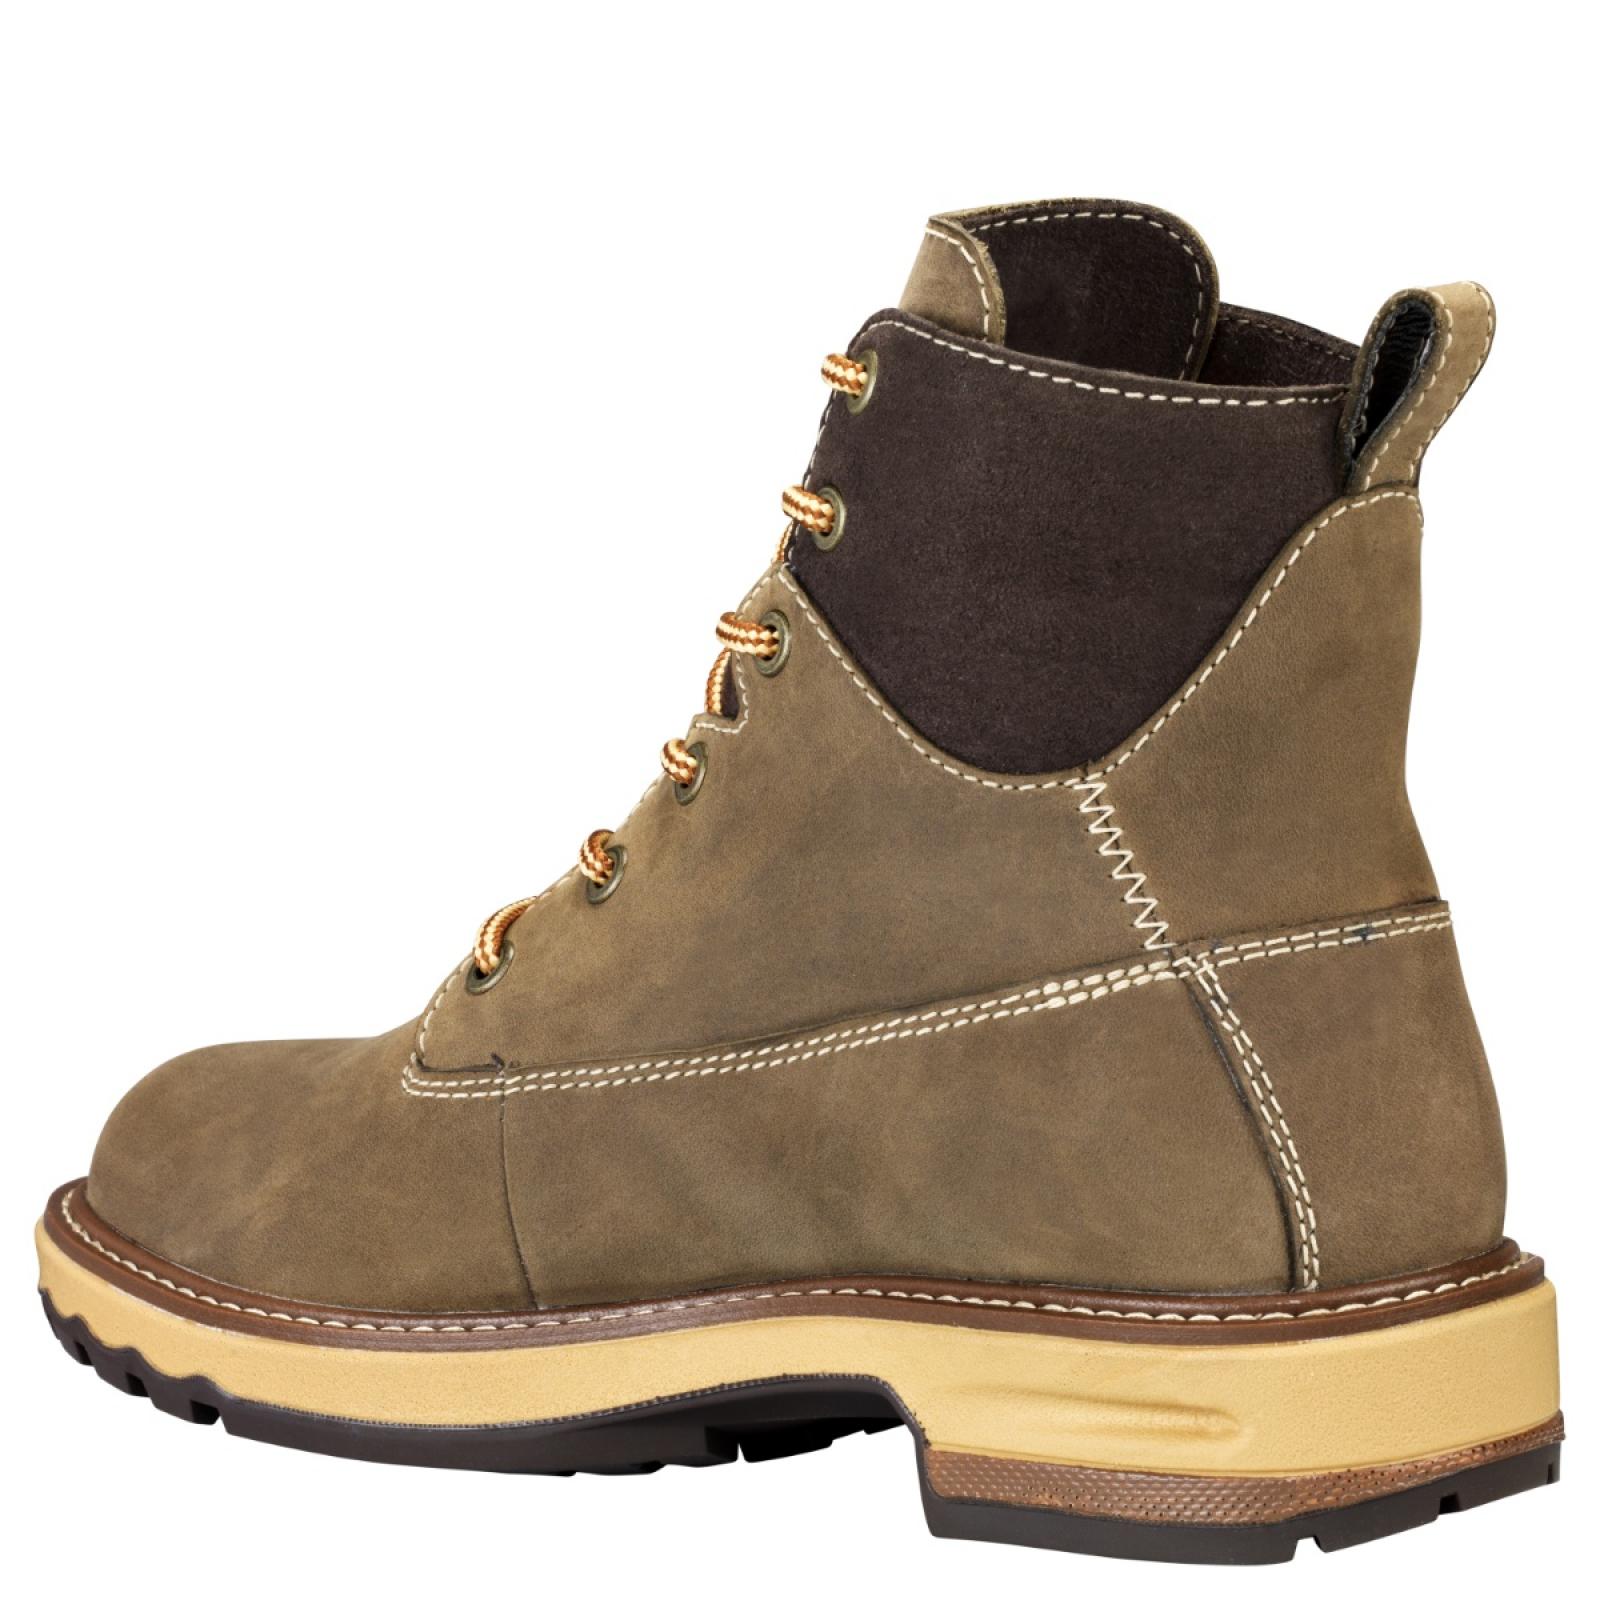 Timberland PRO Women's Hightower 6” Soft Toe Work Boots